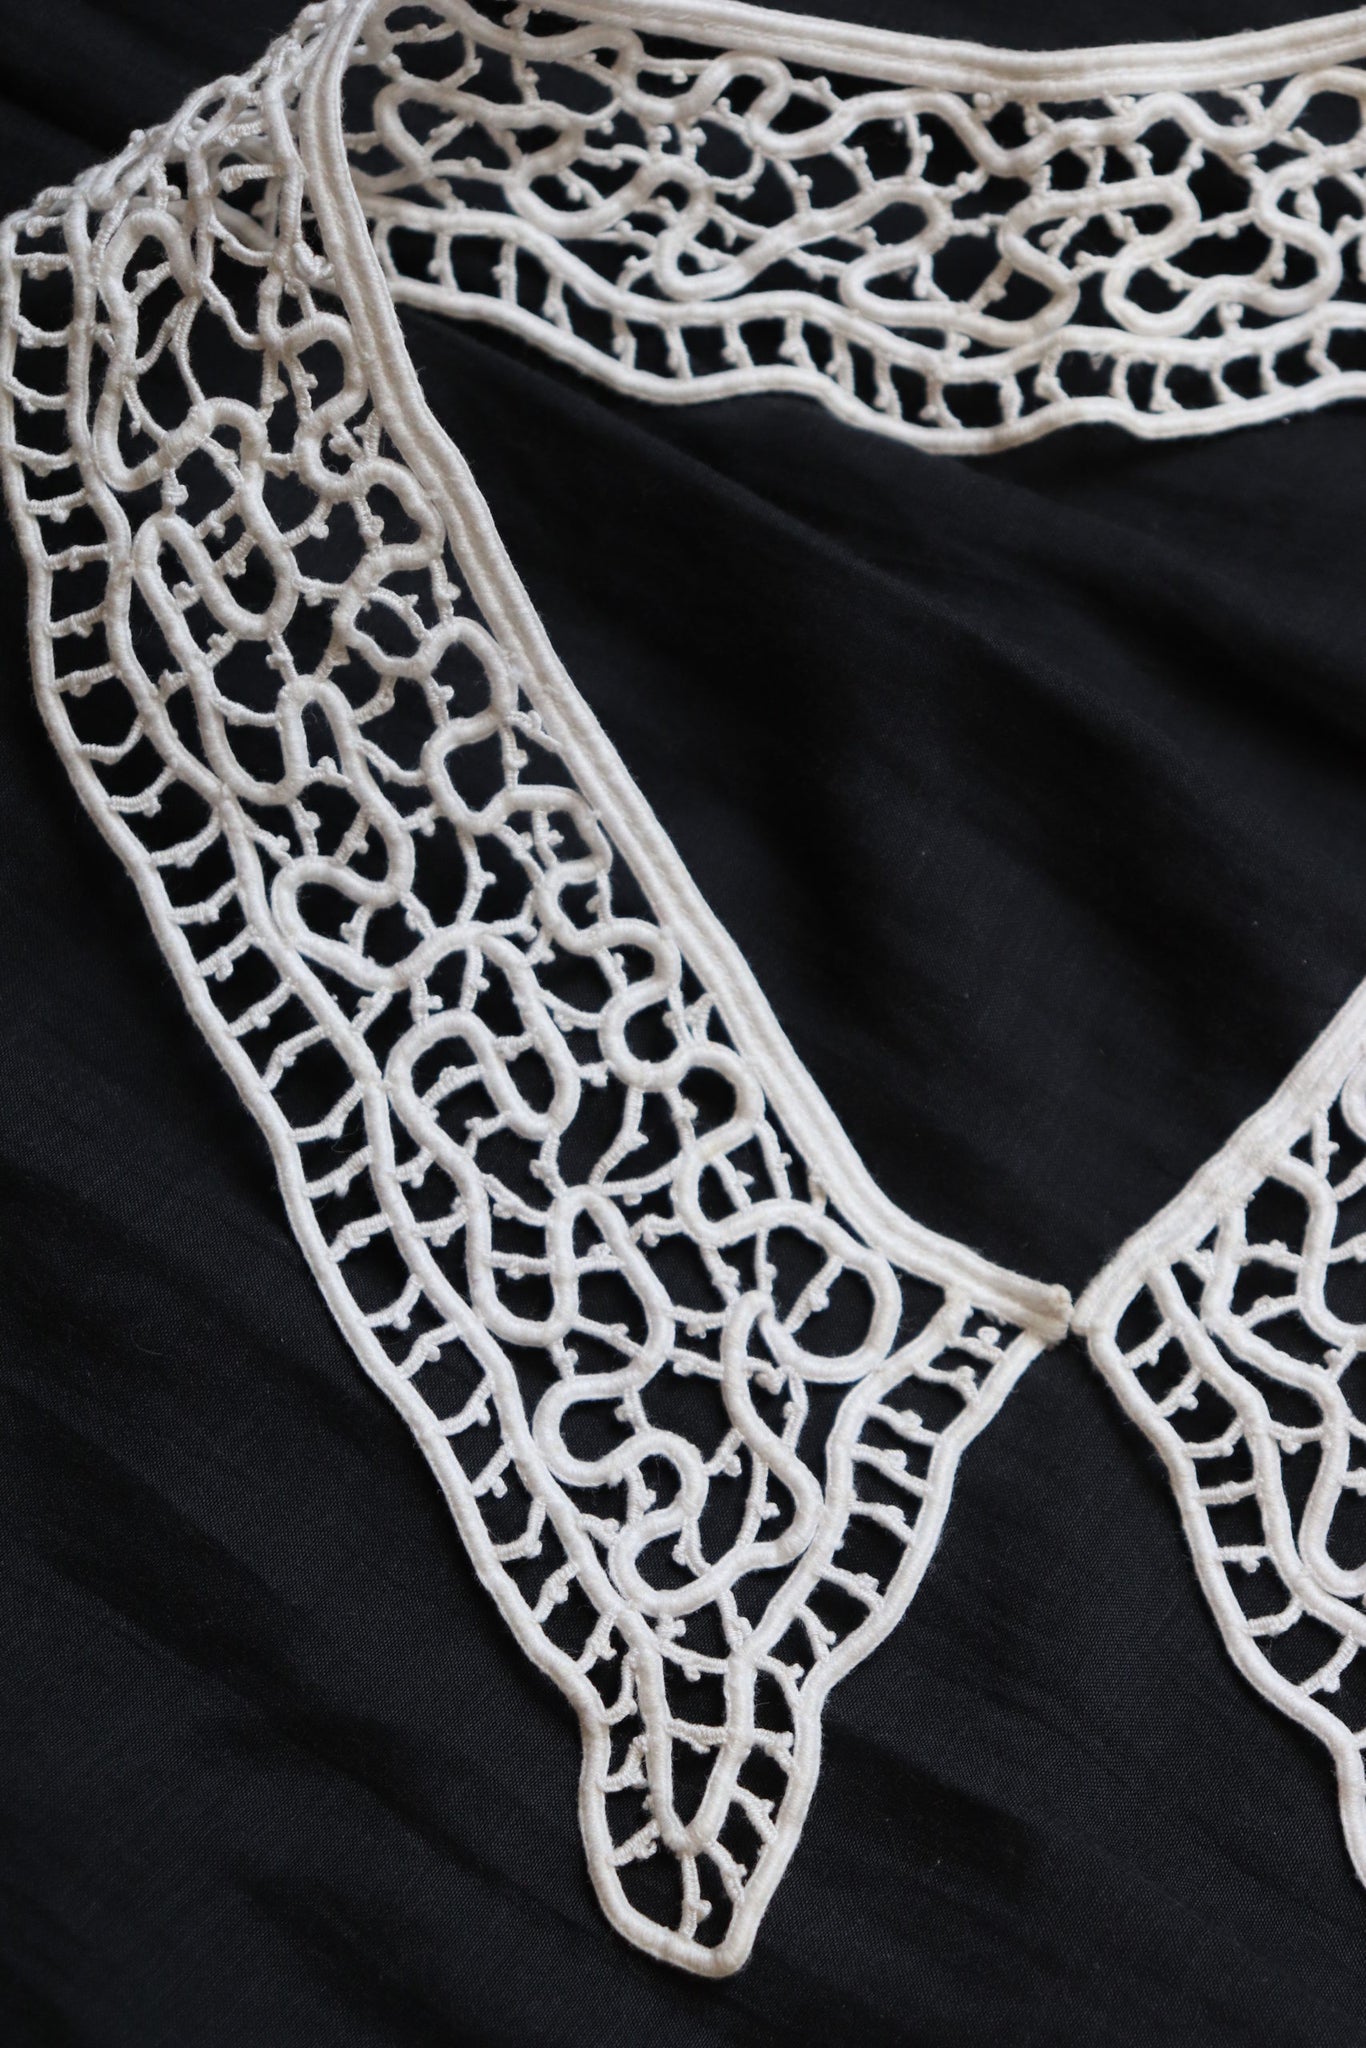 1910s White Handmade Lace Collar